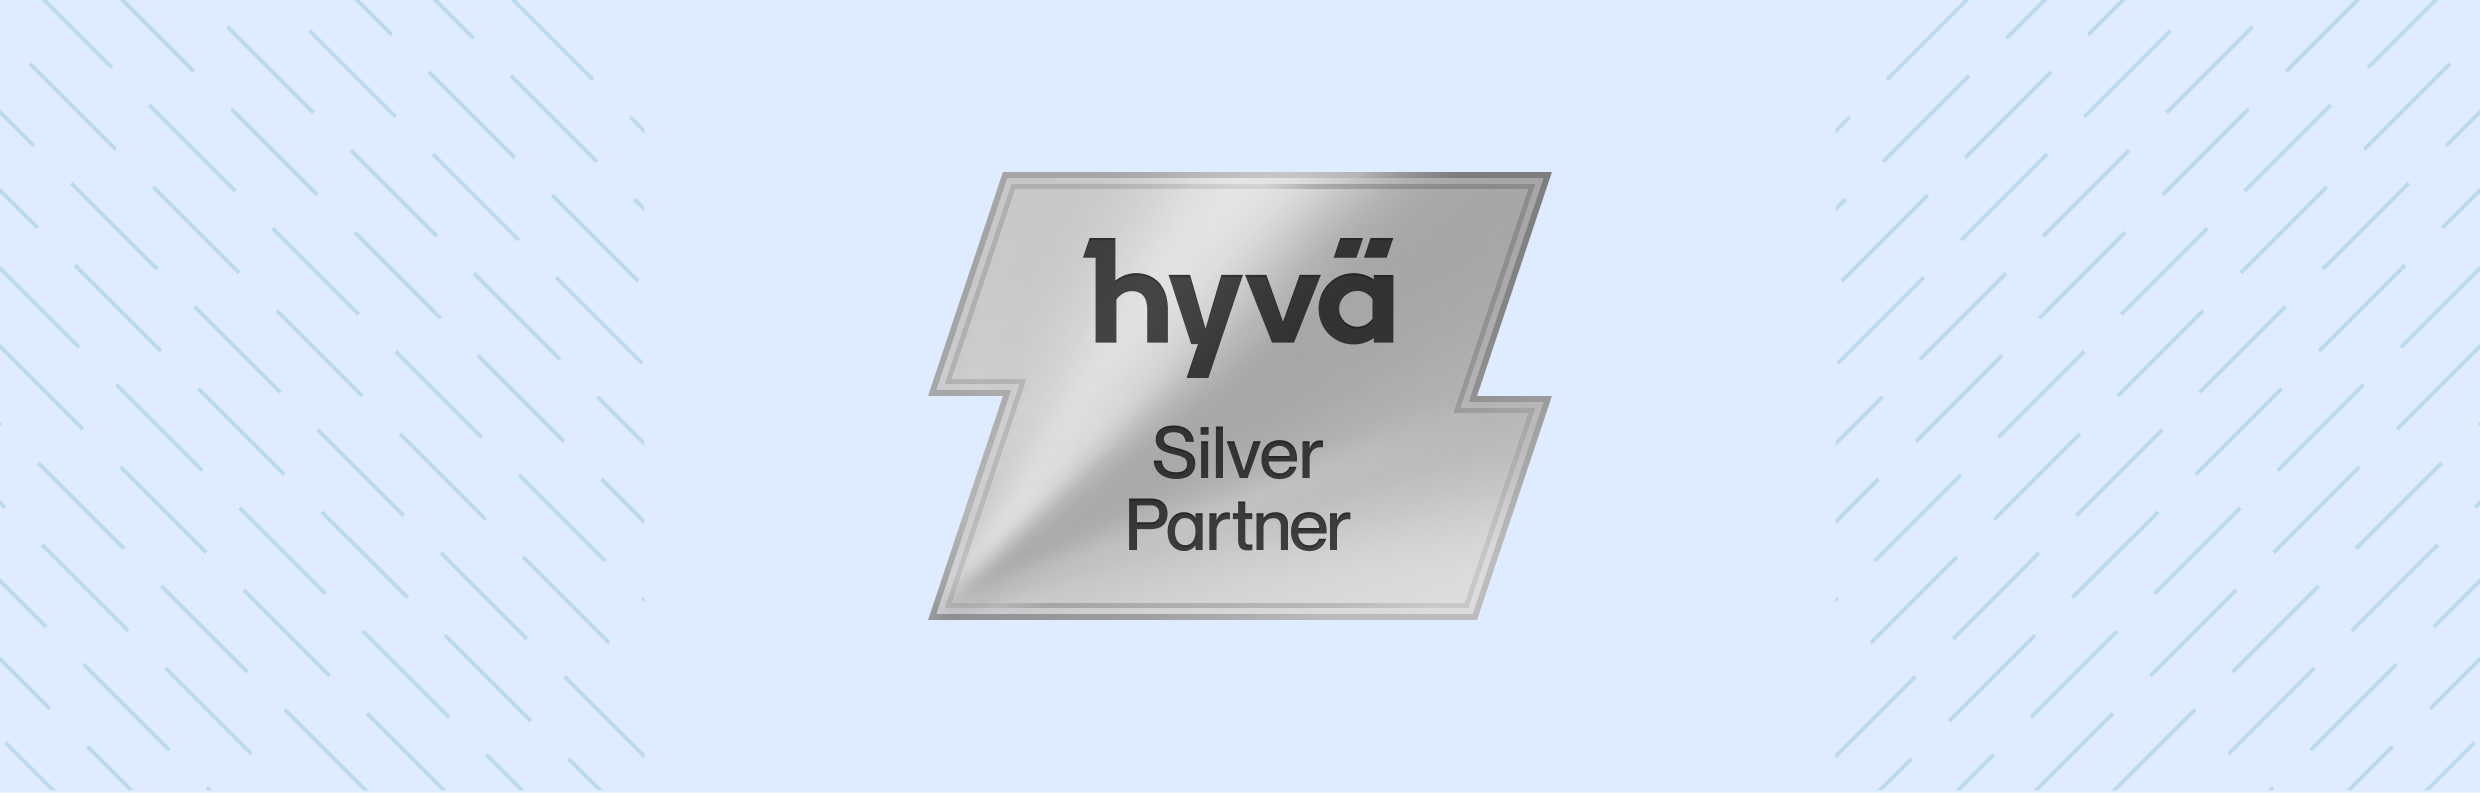 Celebrating Our Milestone as a Hyvä Silver Partner